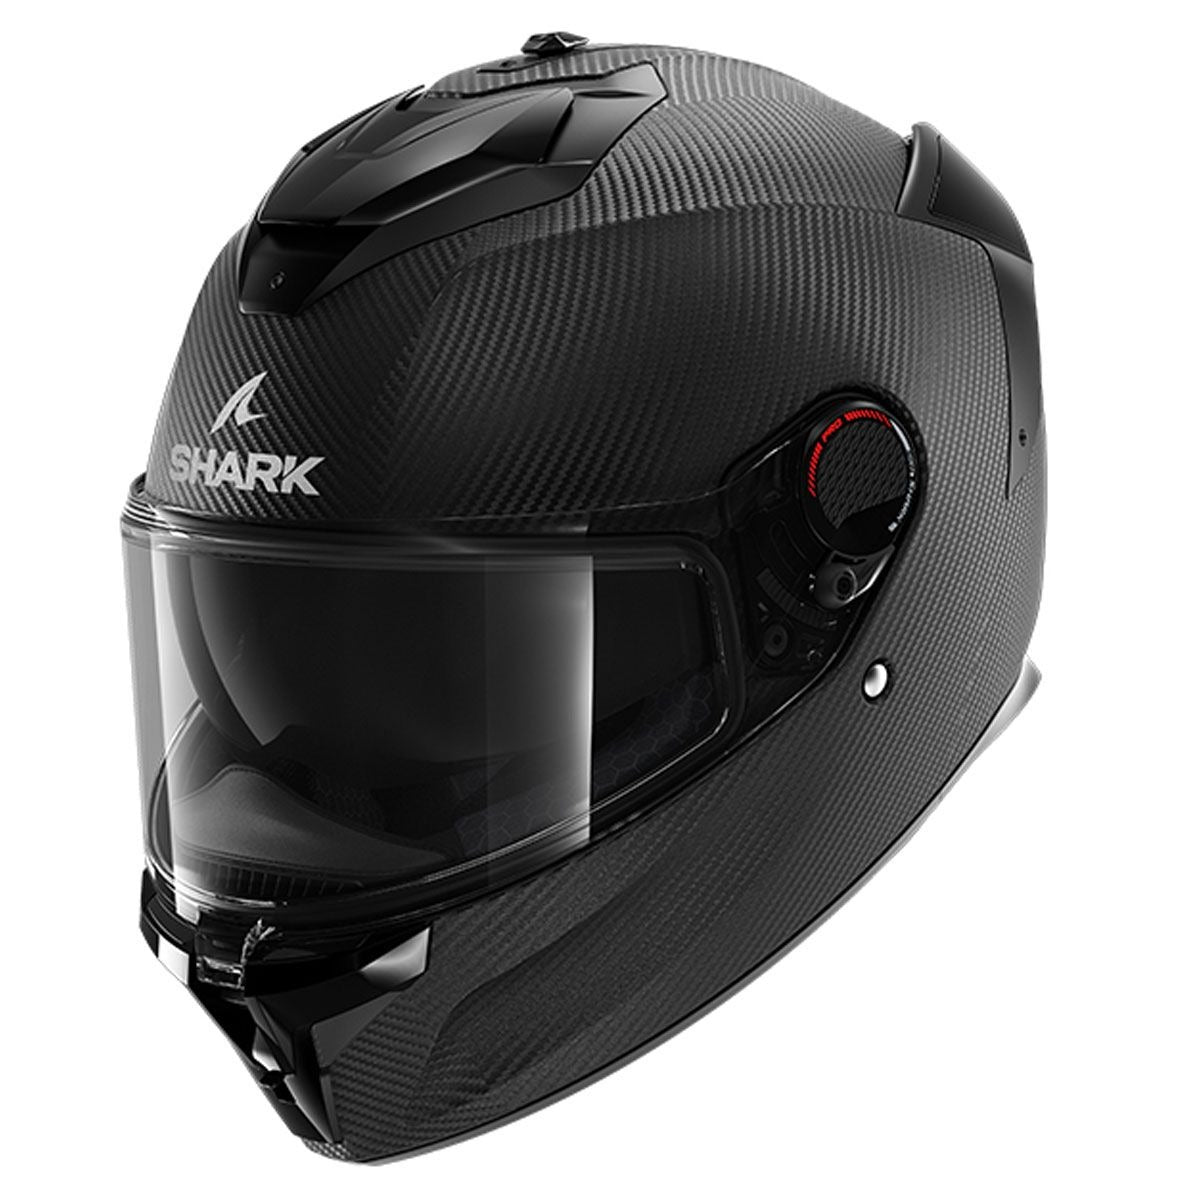 Shark Spartan GT Pro Carbon Skin Matt Helmet (DMA)